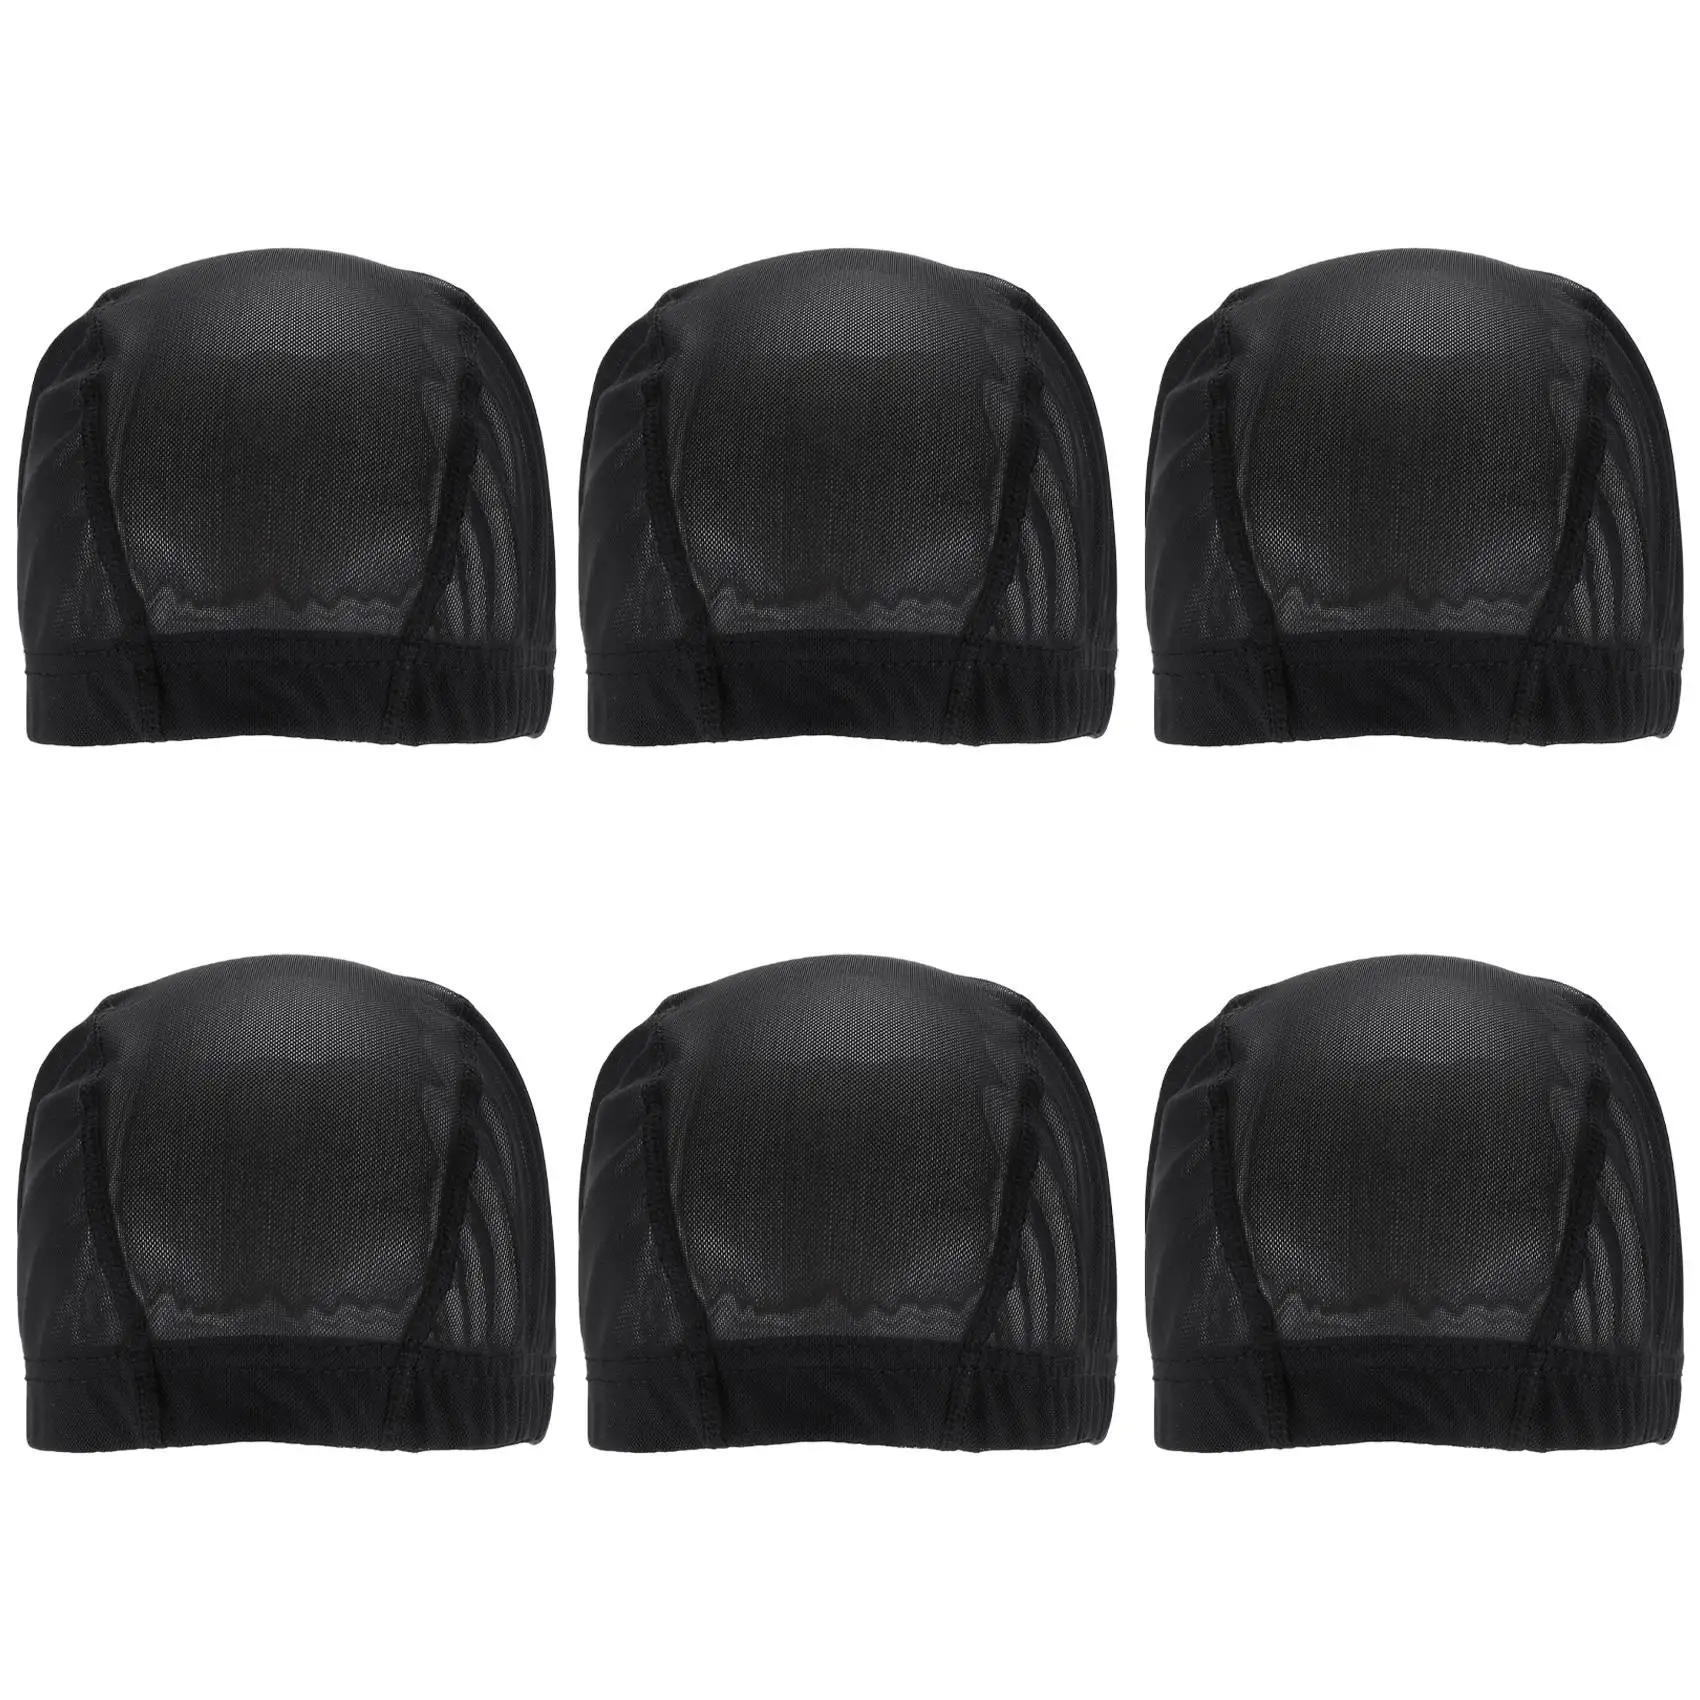 

6 Pcs Wig Cap for Wig Making Elastic Dome Mesh Wig Cap Women's Front Lace Wig Black